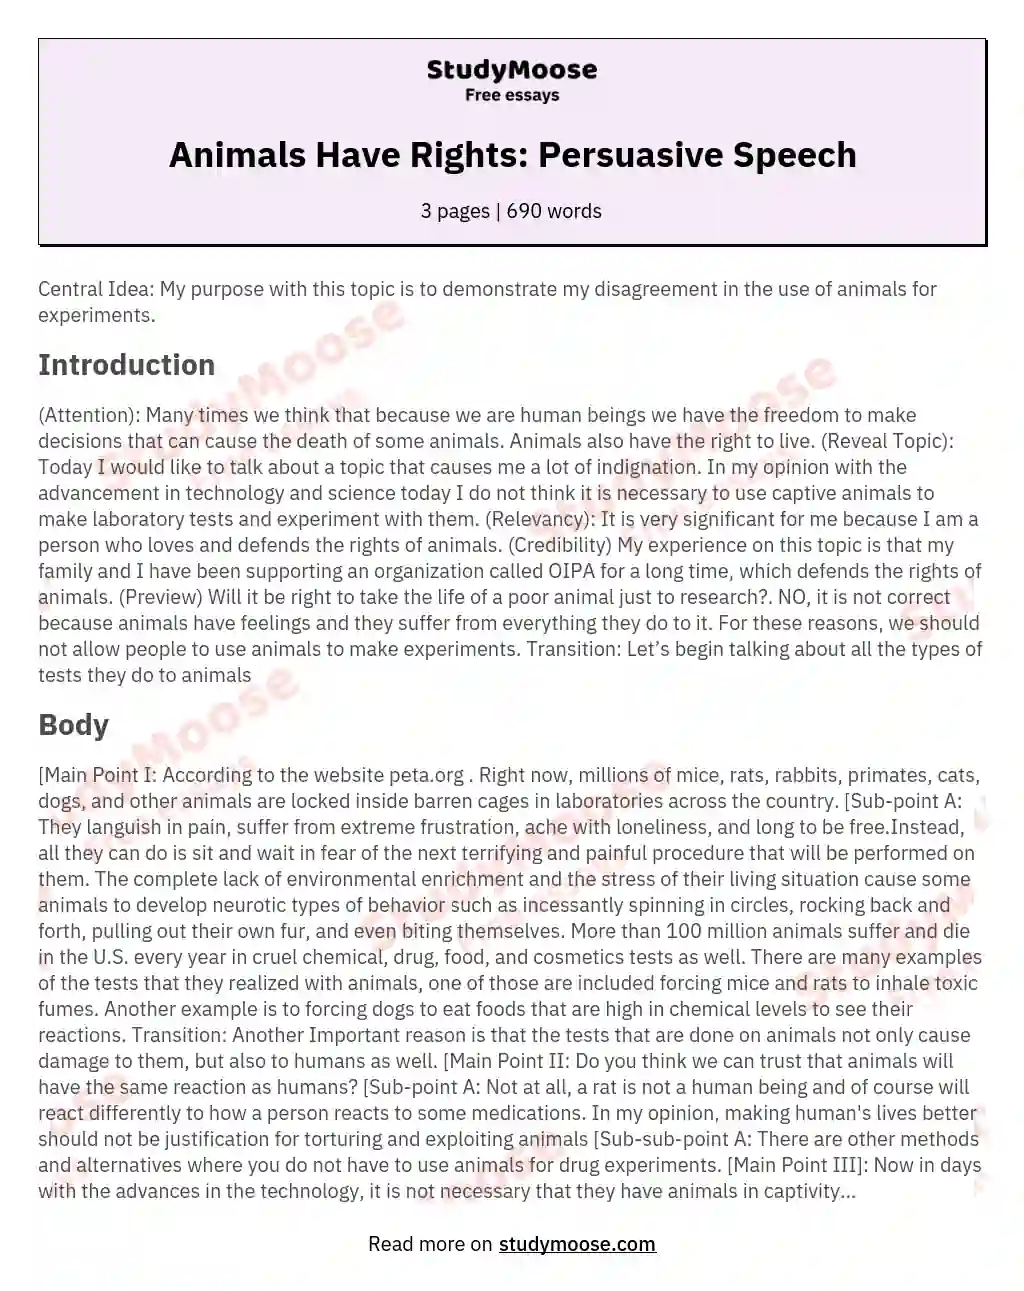 Animals Have Rights: Persuasive Speech Free Essay Example